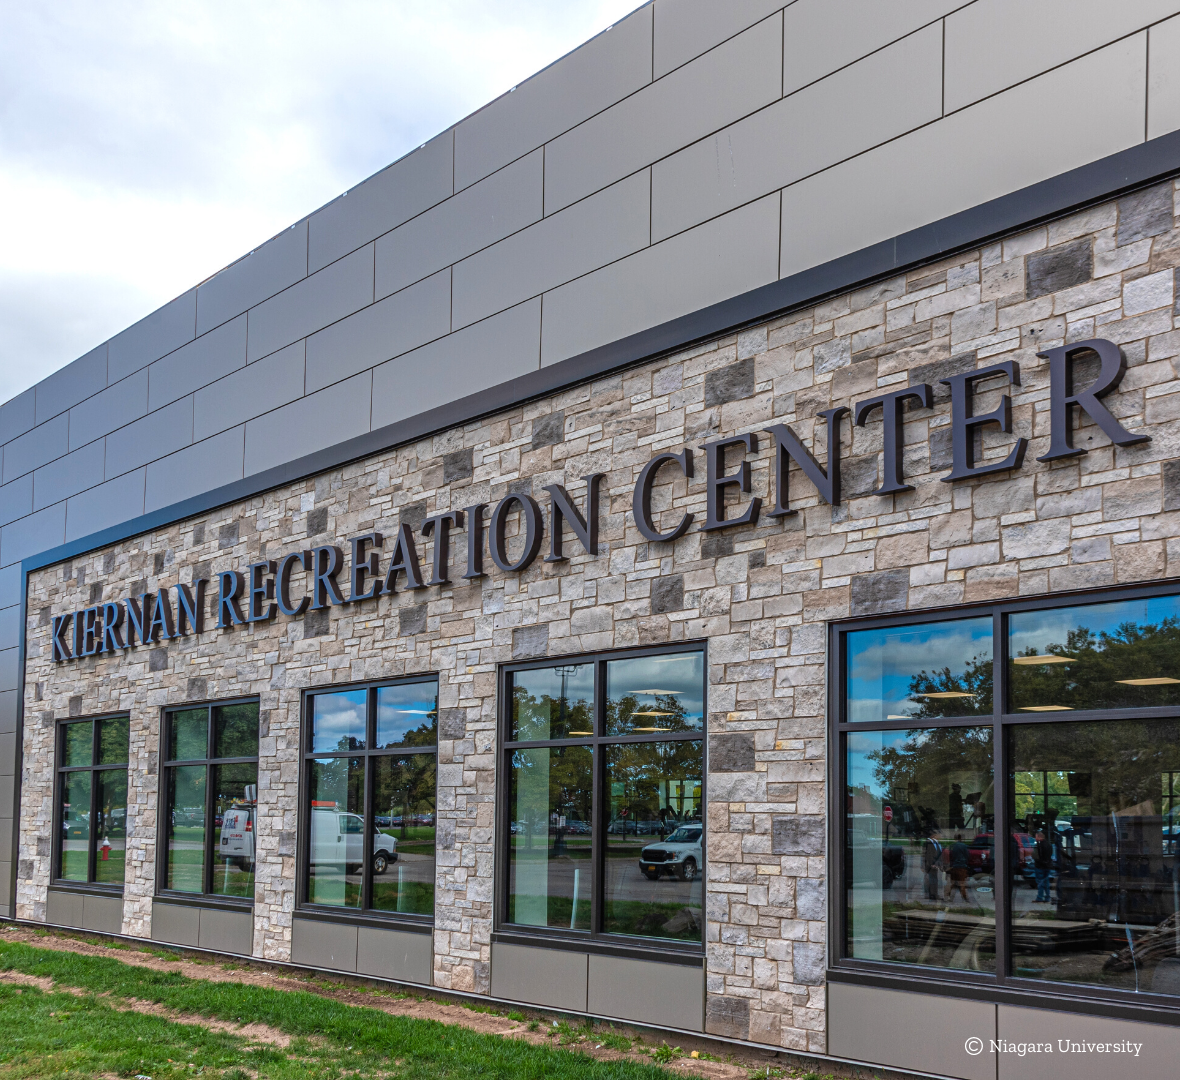 The Kiernan Recreation Center at Niagara University